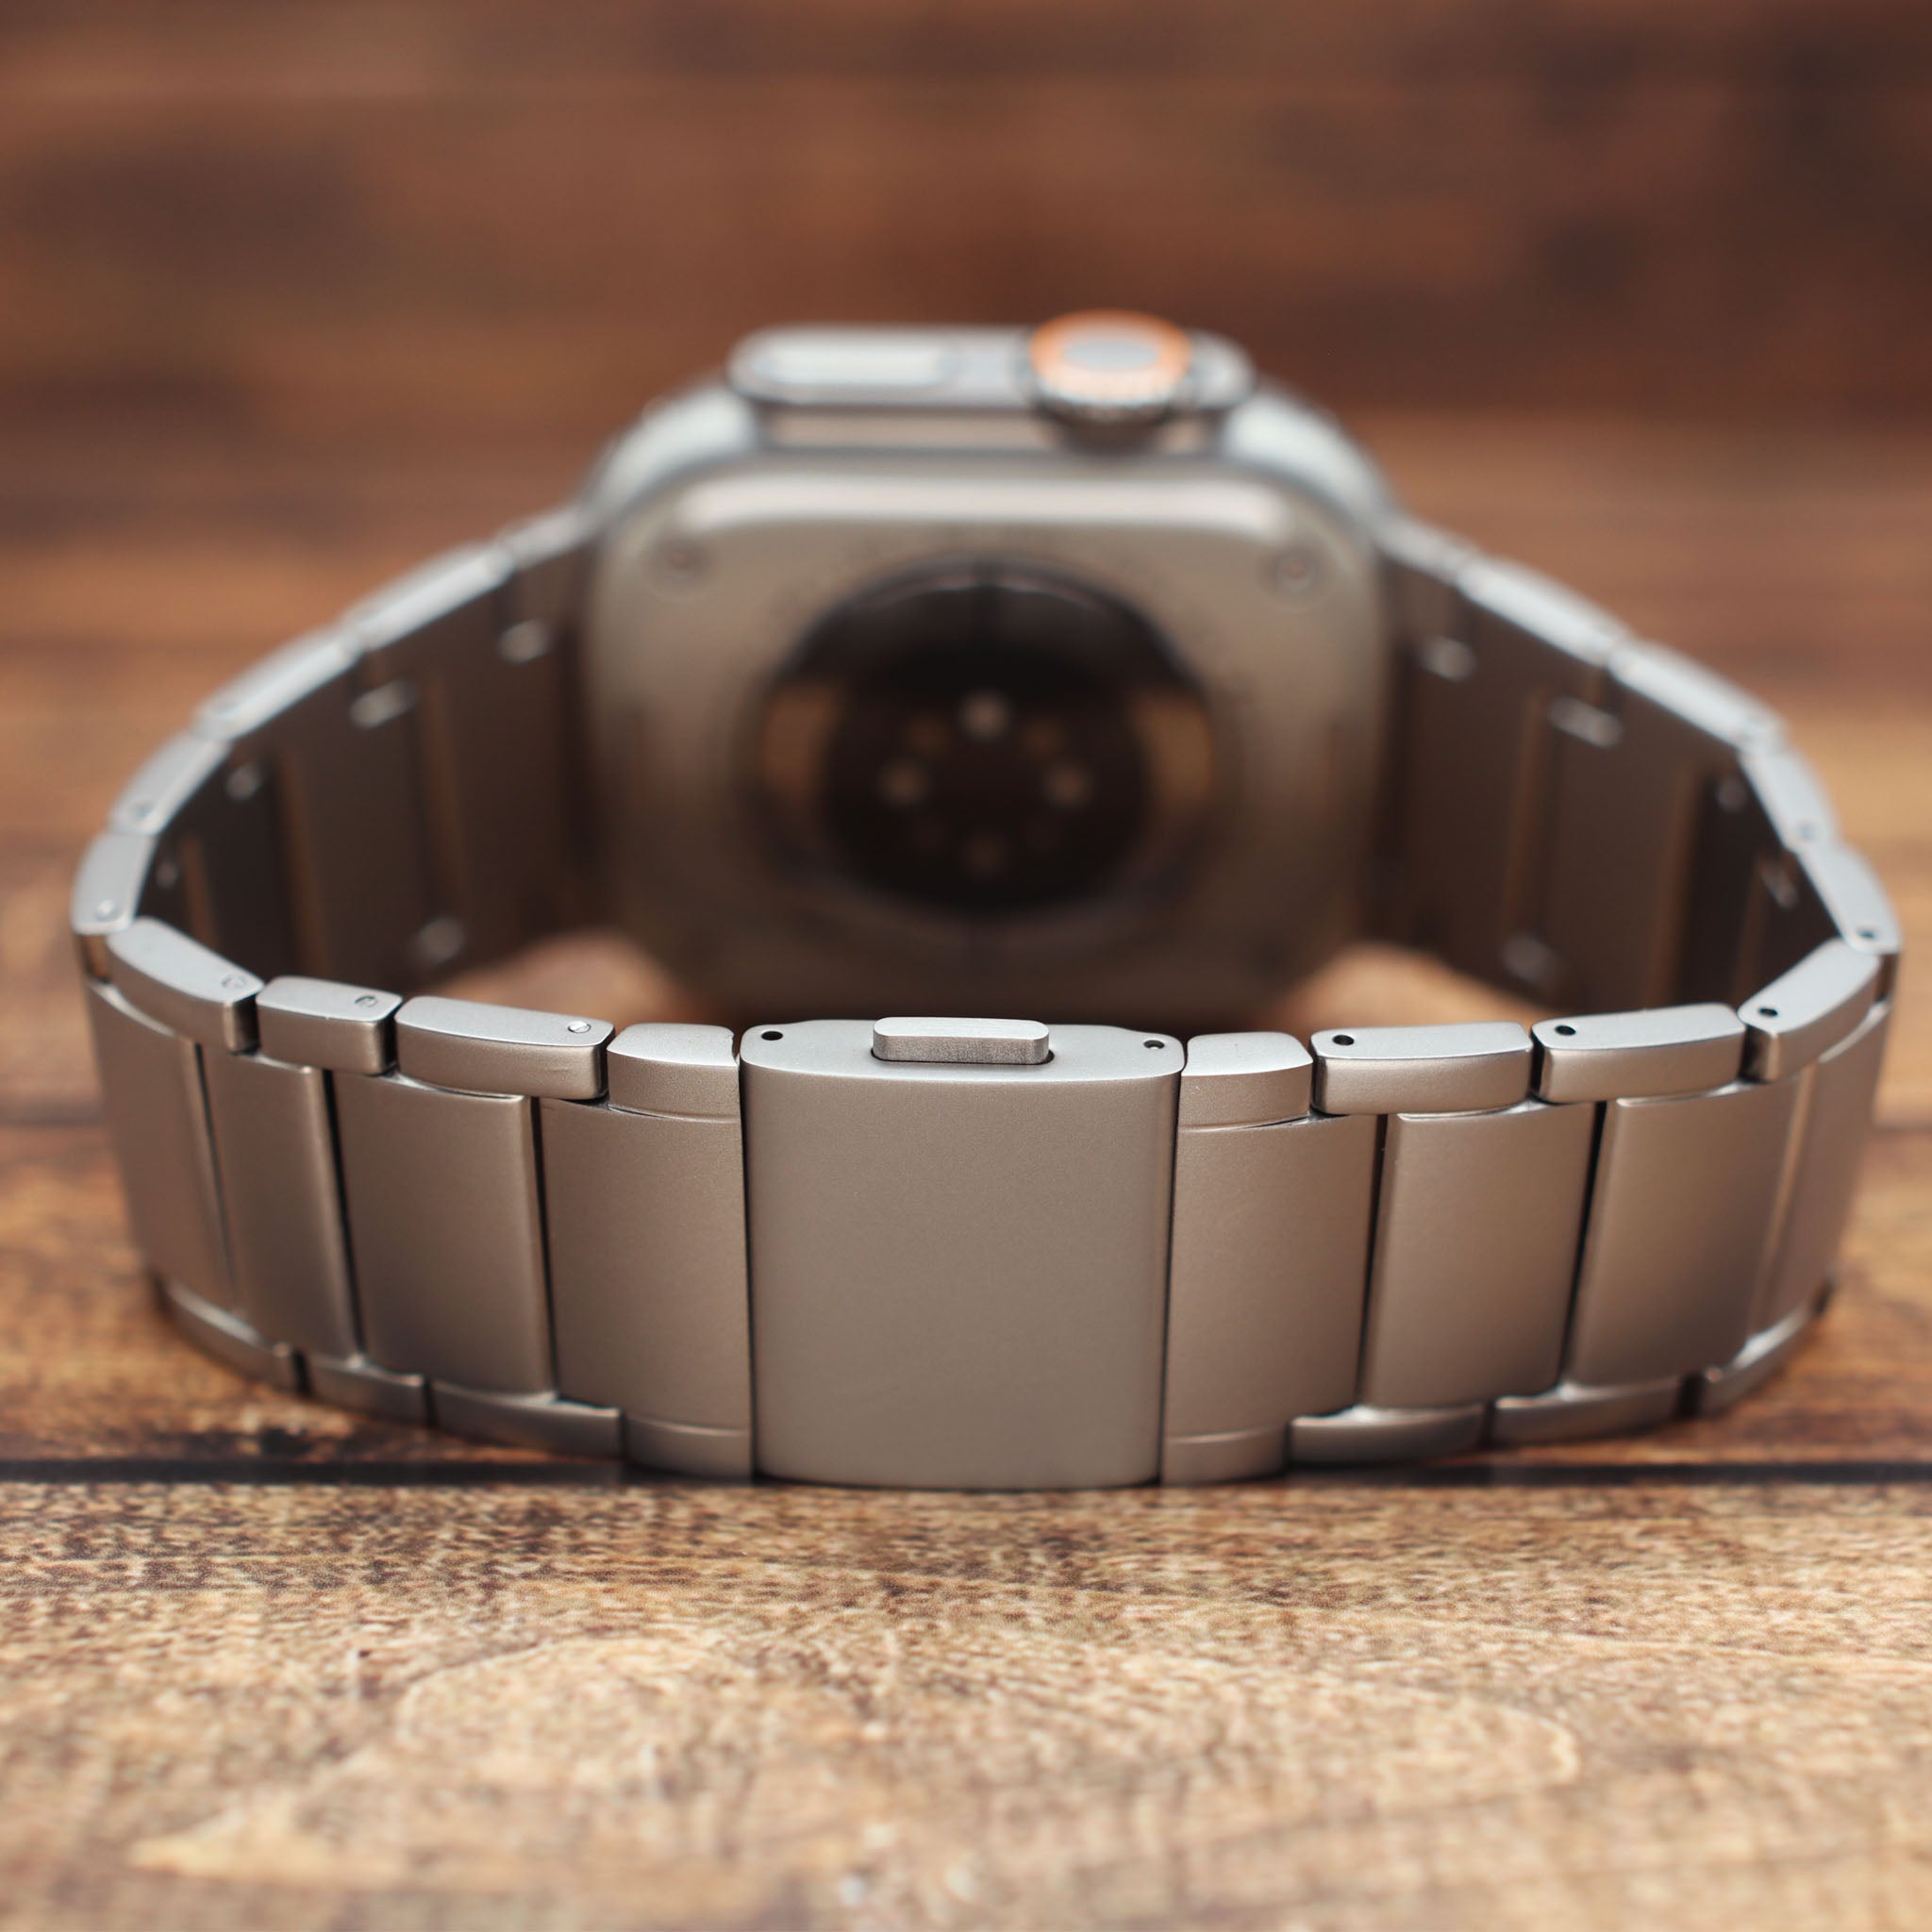 Ultra 2 Titanium Bracelet with Magnet Buckle & DLC Coating for